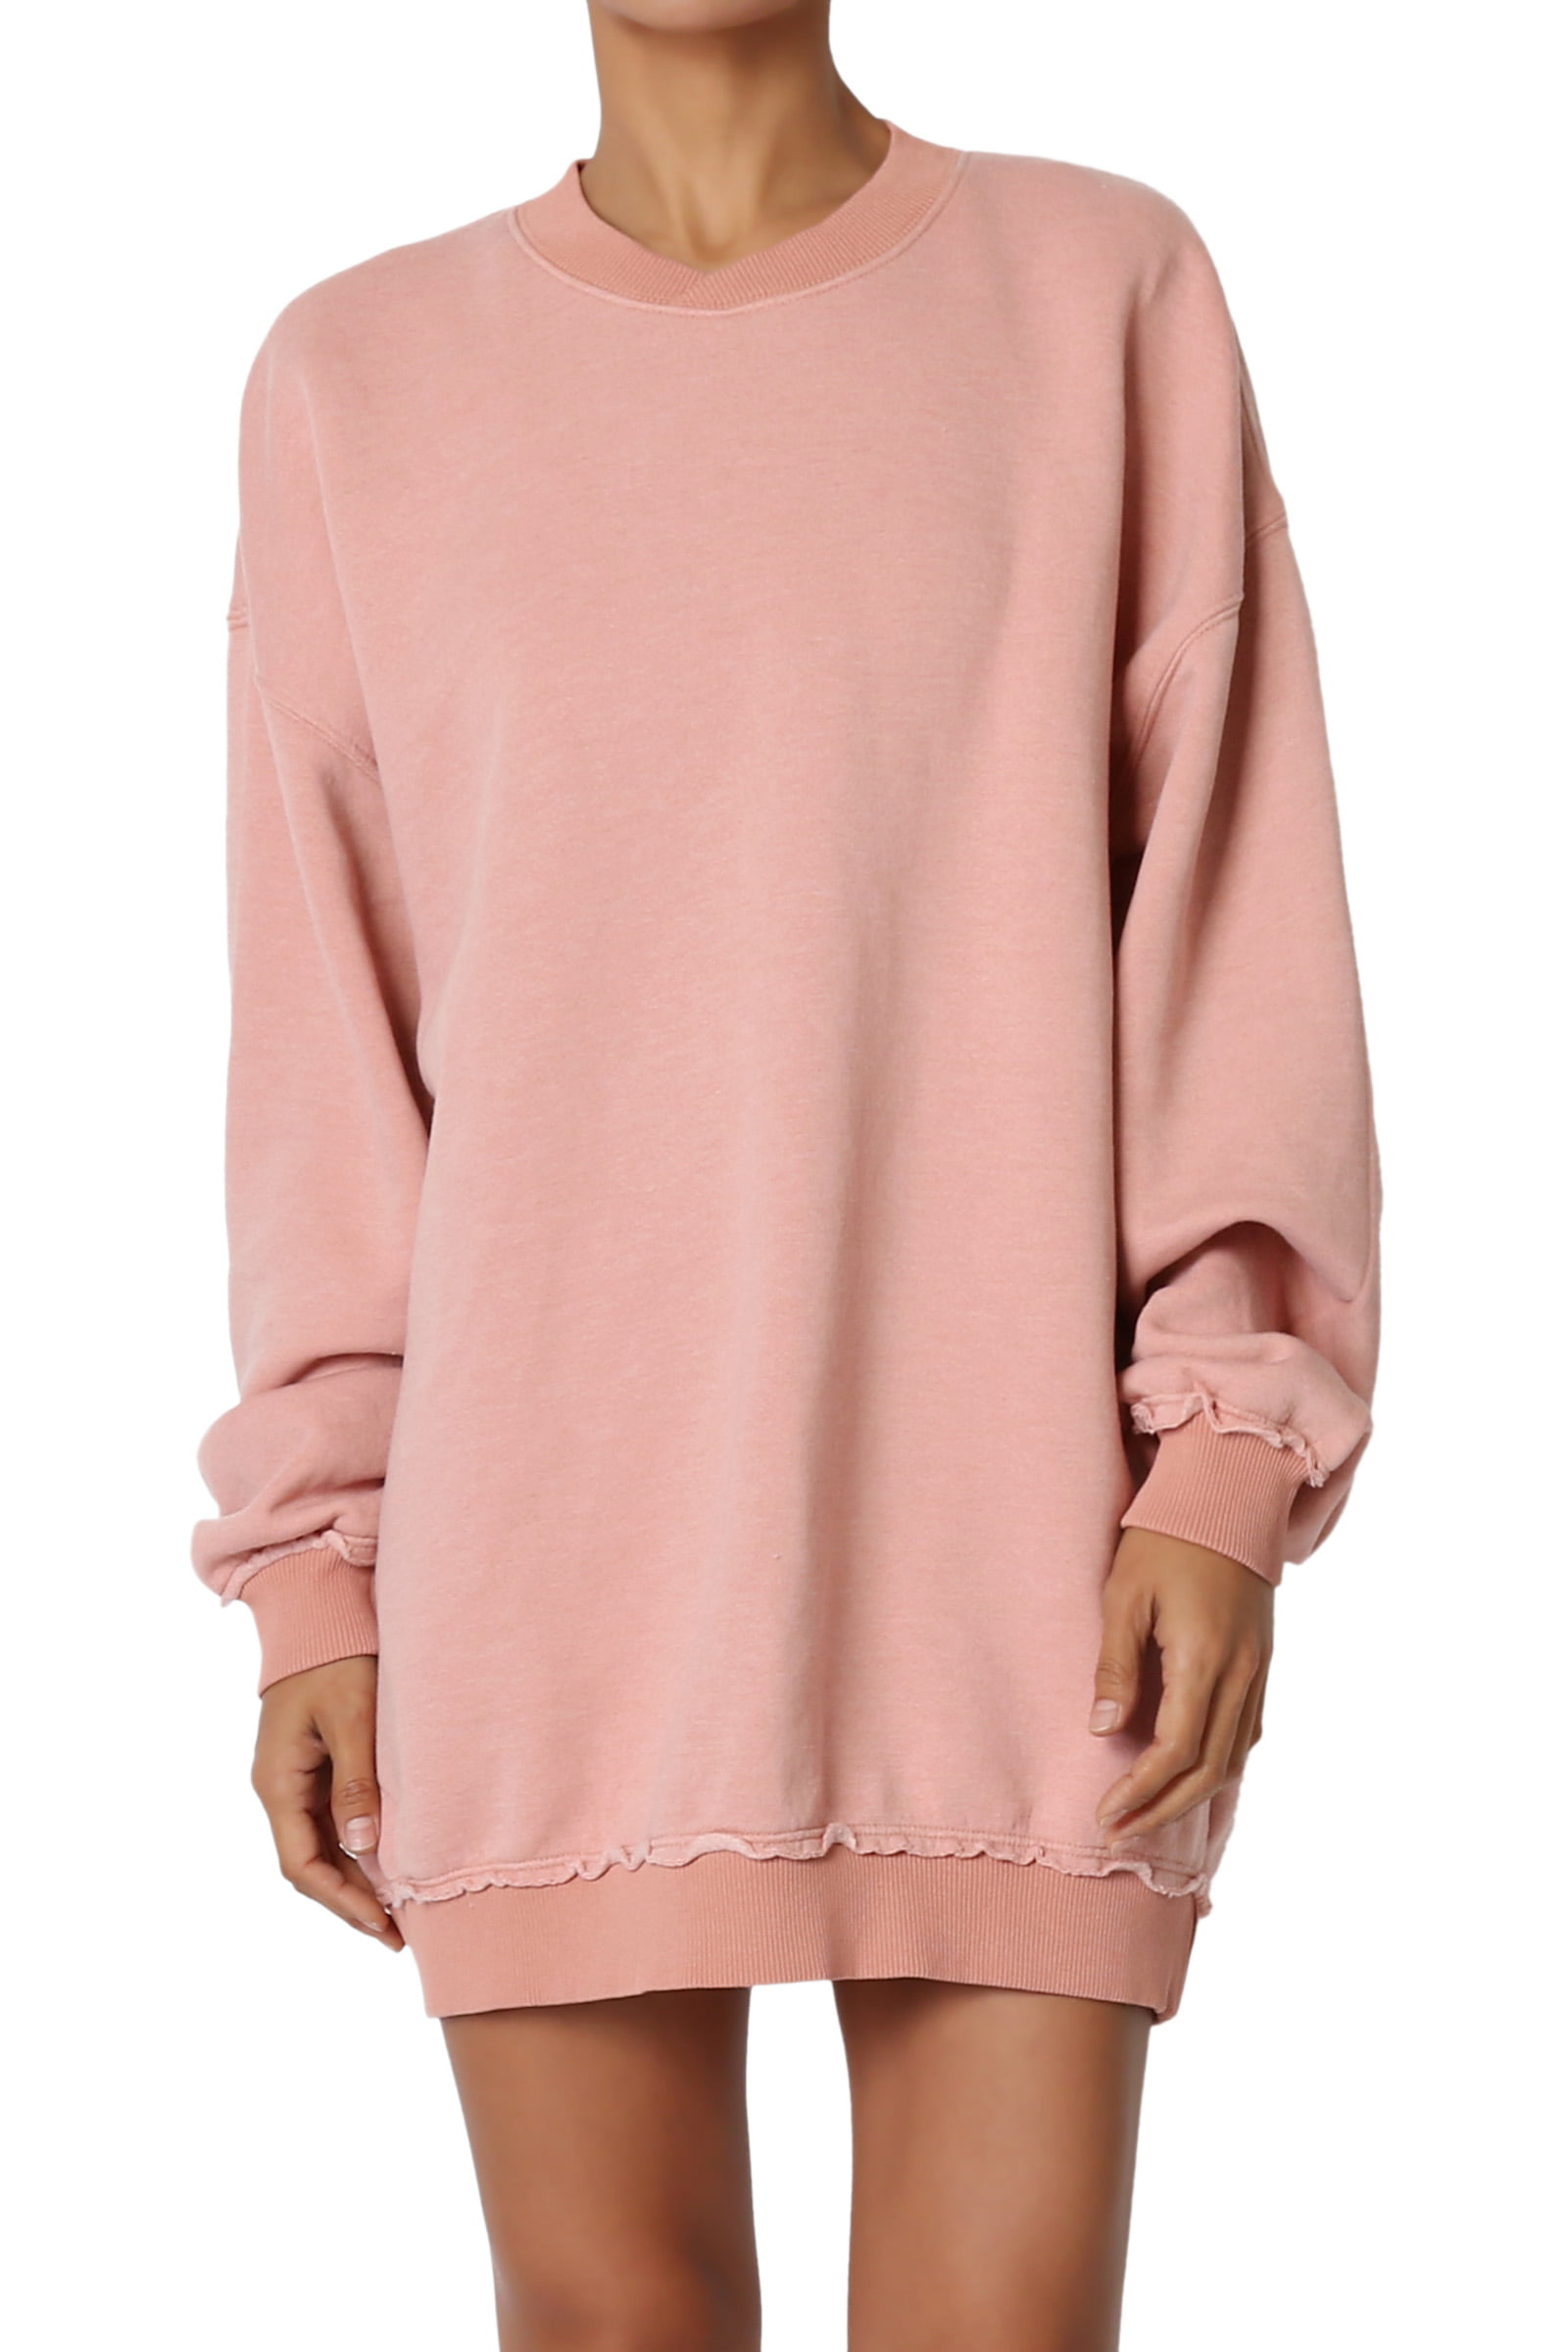 TheMogan - TheMogan Women's Oversized Pigment Dye Fleece Pullover Sweatshirts Pink S - Walmart